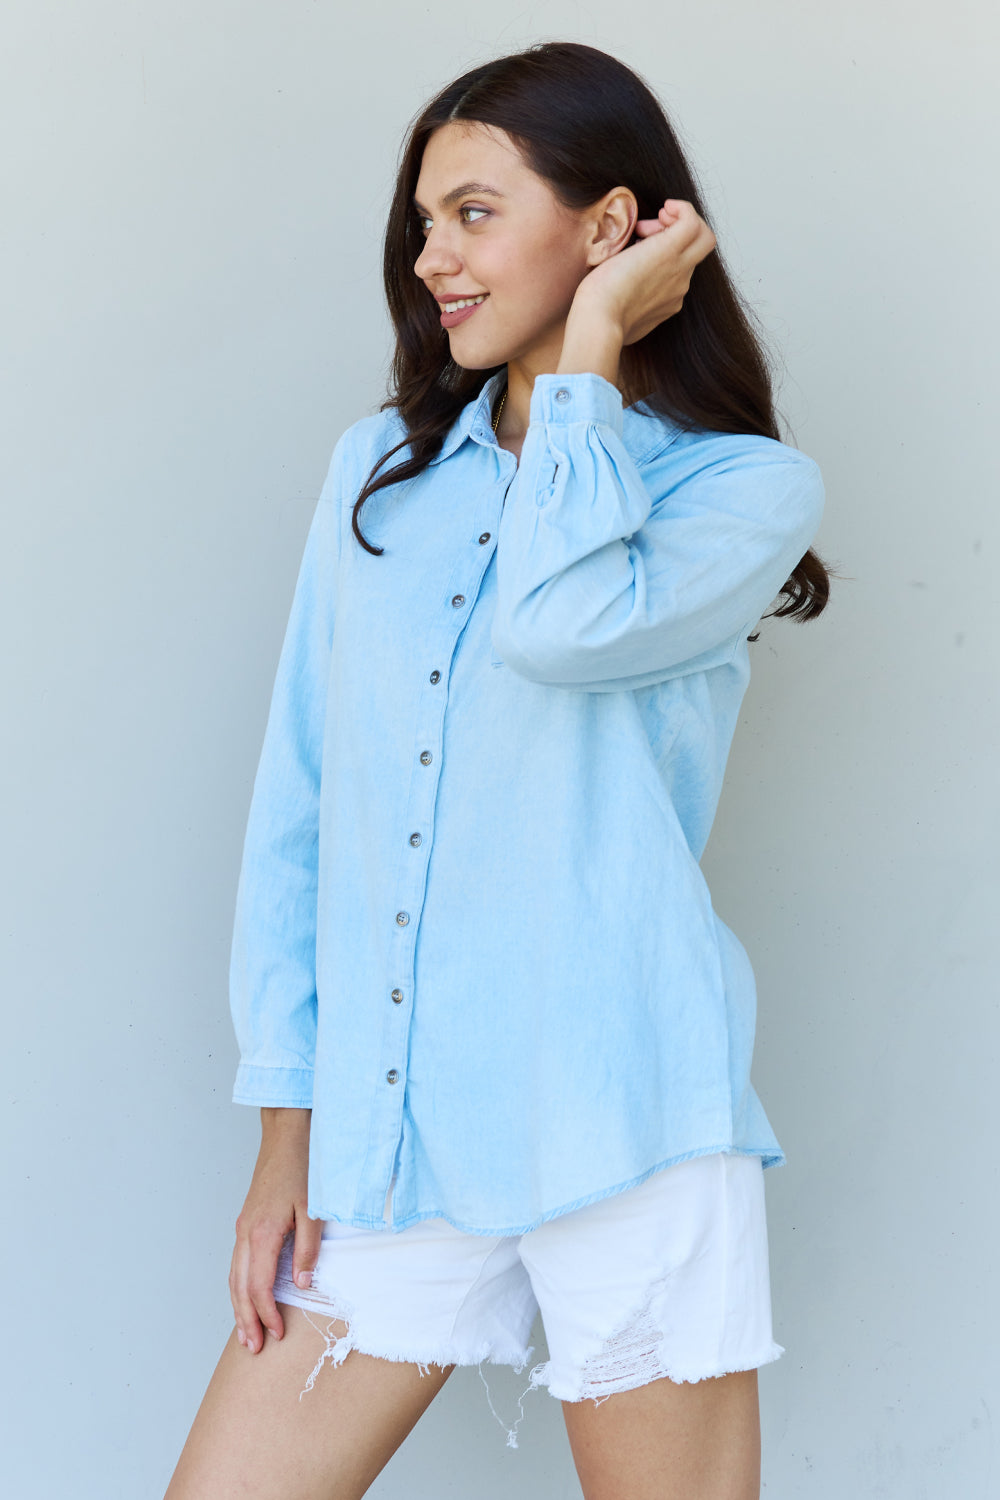 Doublju Blue Jean Baby Denim Button Down Shirt Top in Light Blue - Tigbul's Fashion